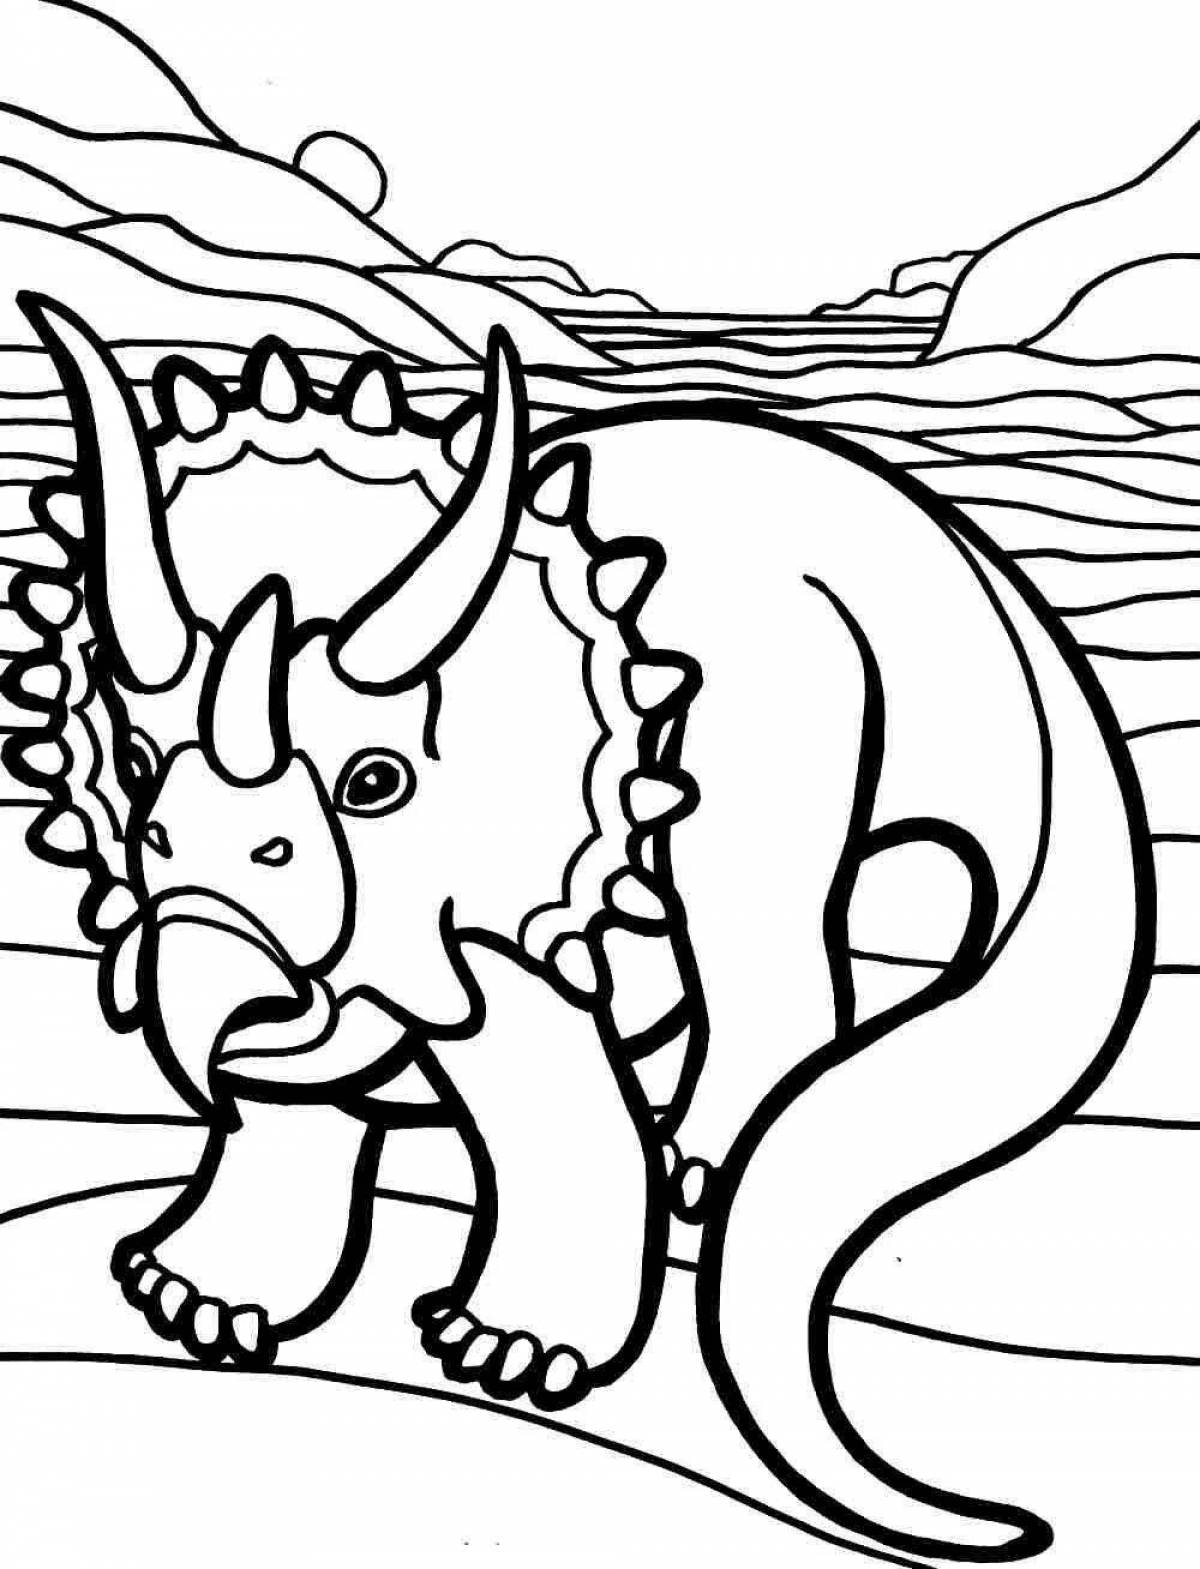 Coloring book shining triceratops dinosaur